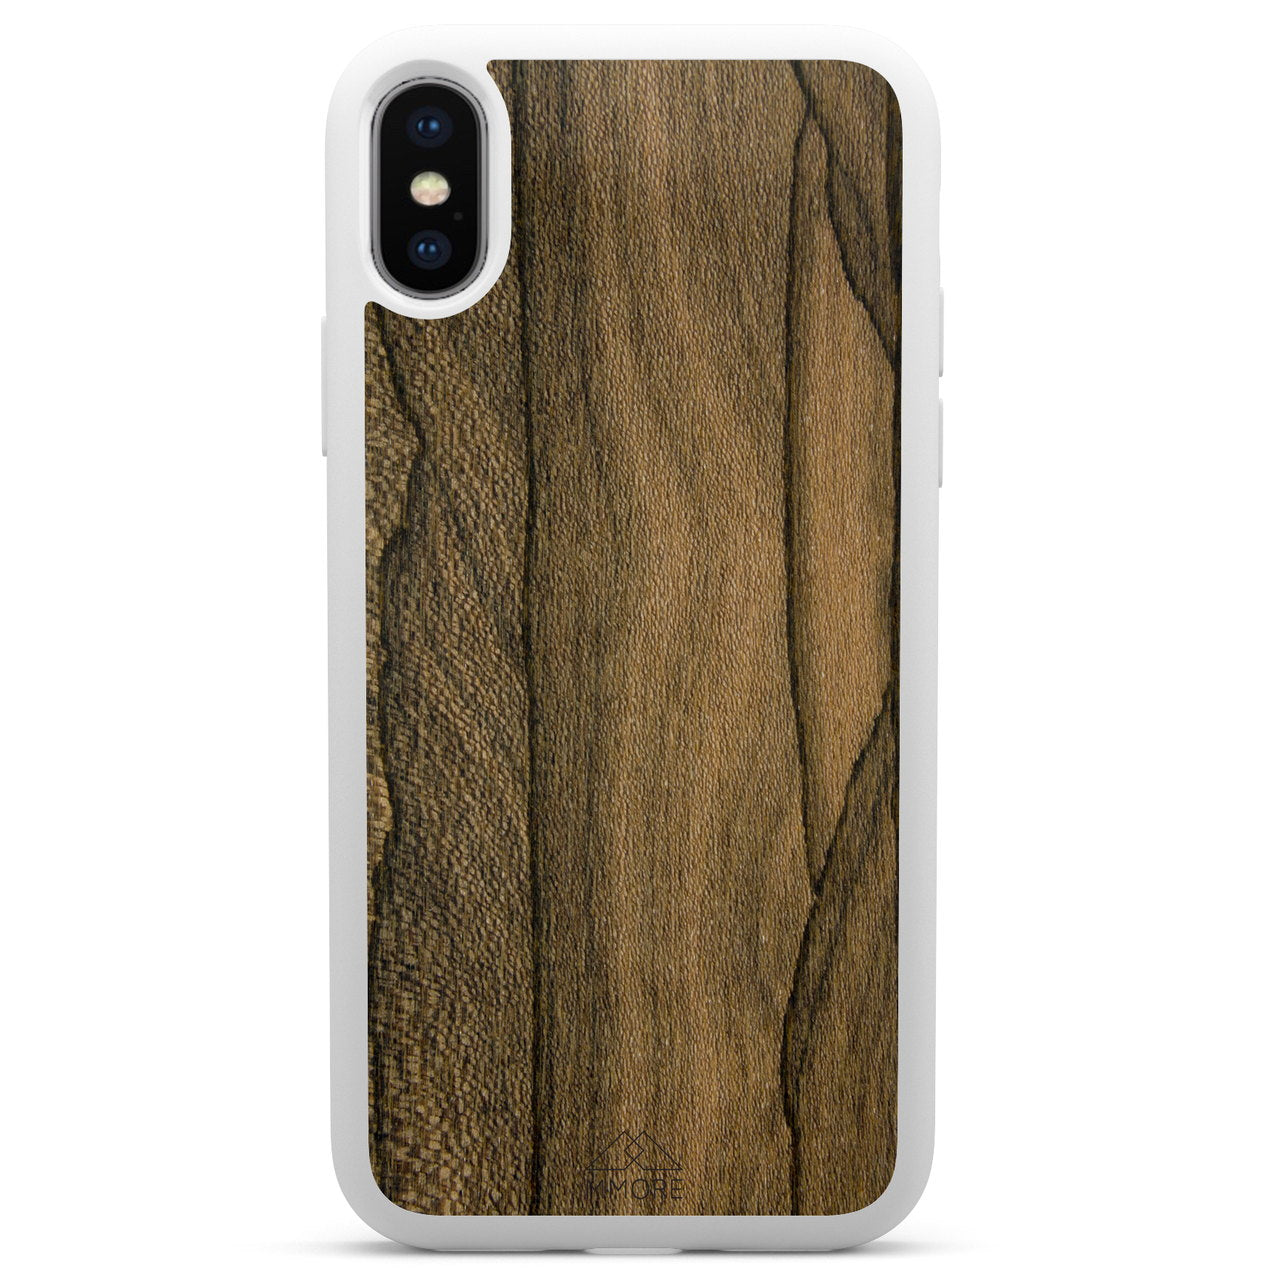 Funda para iPhone X Ziricote Wood blanca para teléfono